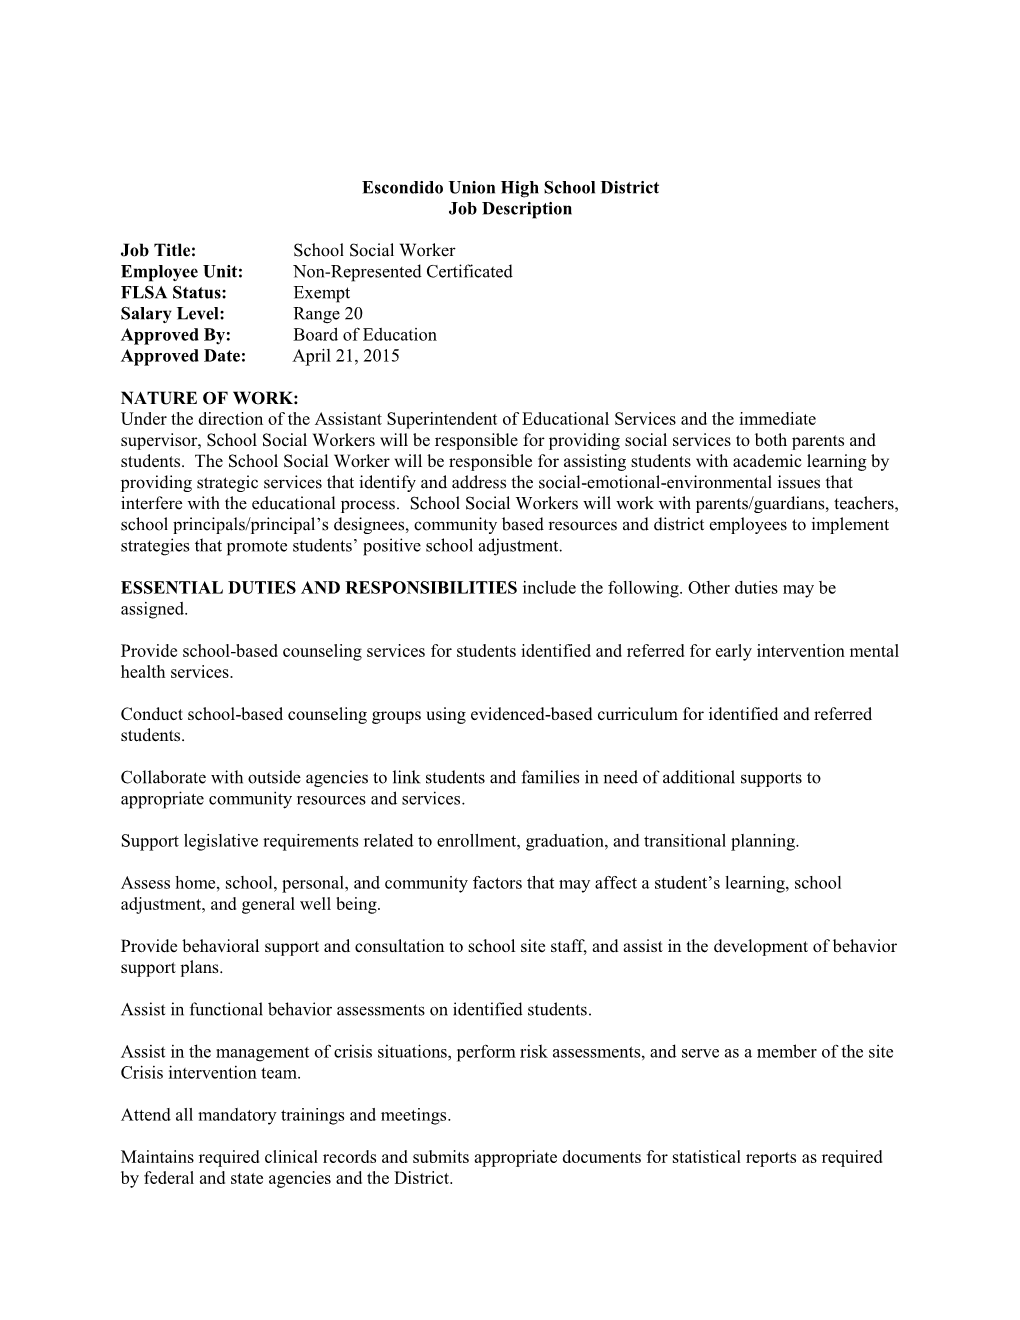 Escondido Union High School District Job Description Job Title: School Social Worker Employee Unit: Non-Represented Certificated